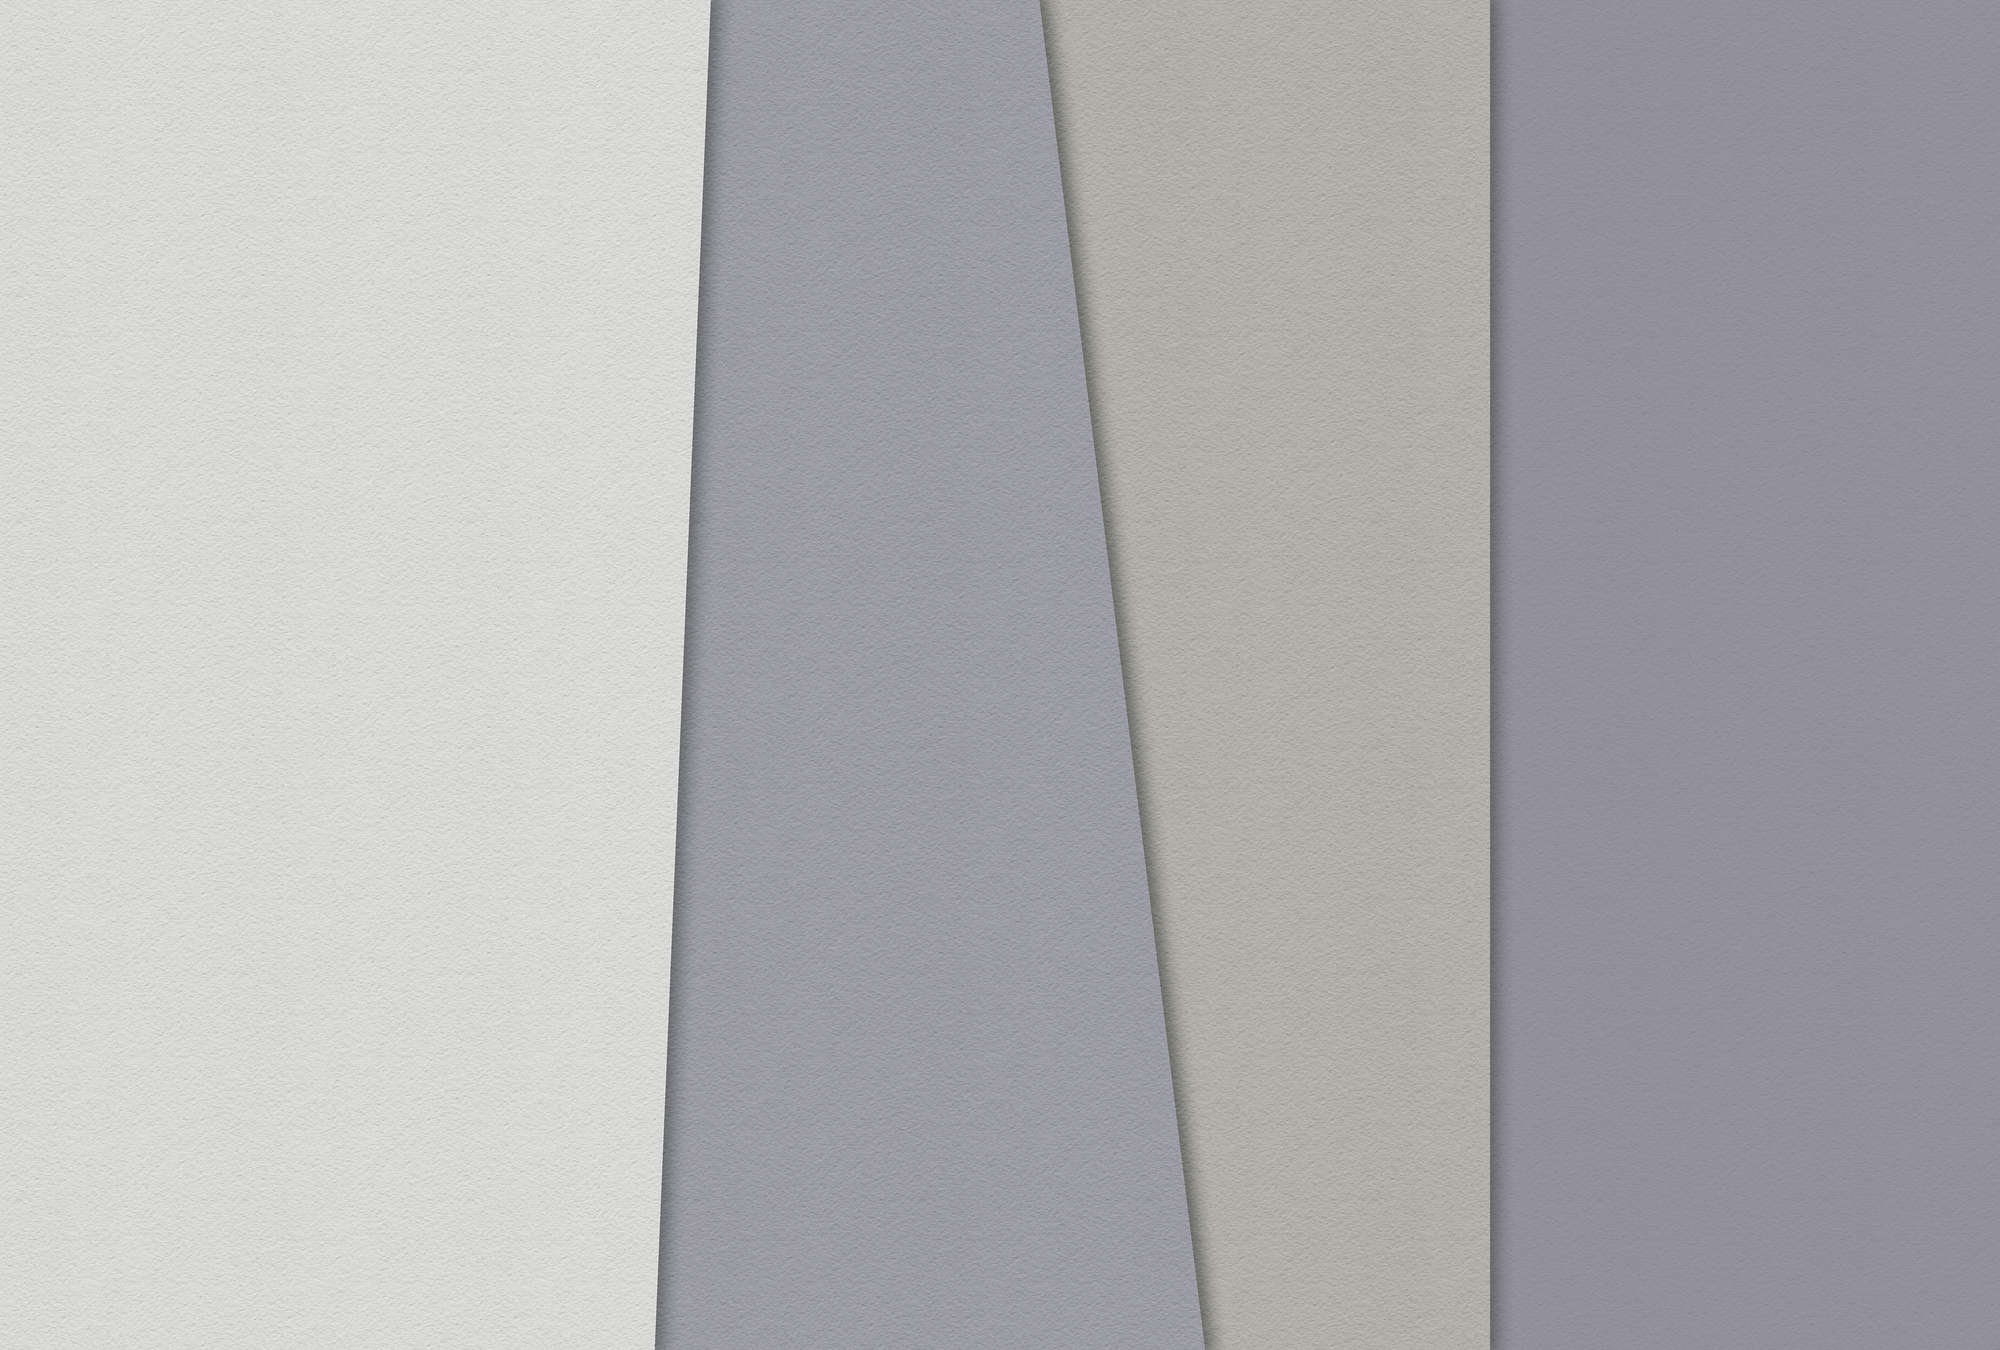             Carta stratificata 2 - Carta da parati grafica, struttura in carta fatta a mano design minimalista - Crema, Verde | Pile liscio opaco
        